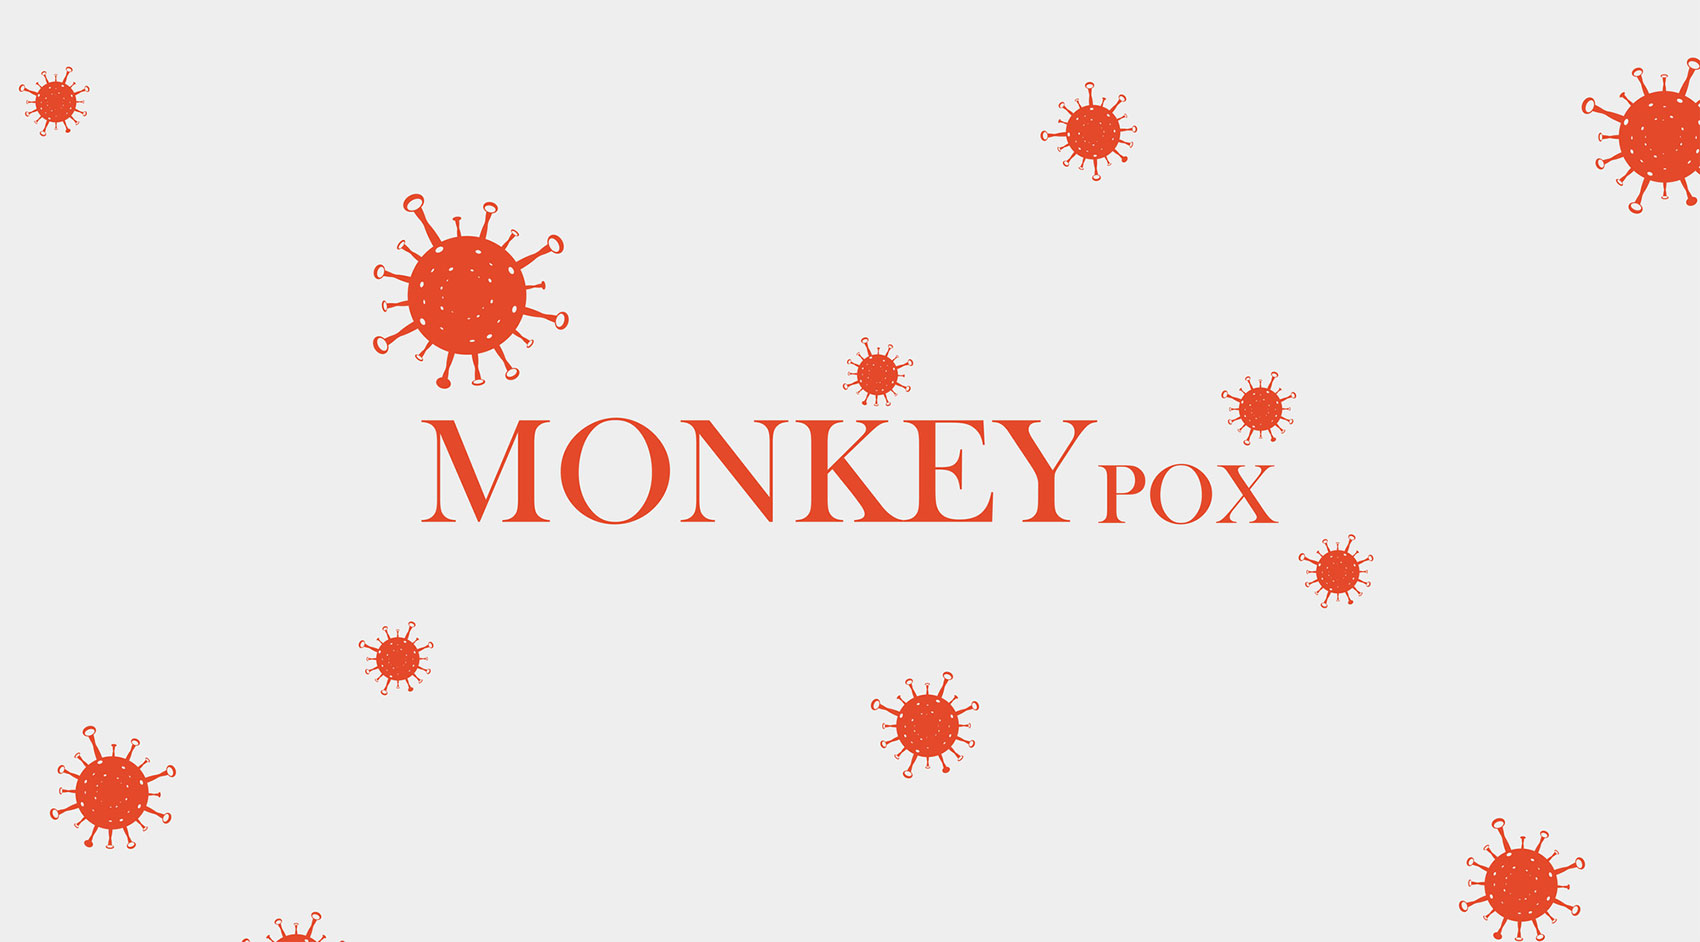 Ask The Batemaster: Monkeypox and Masturbation